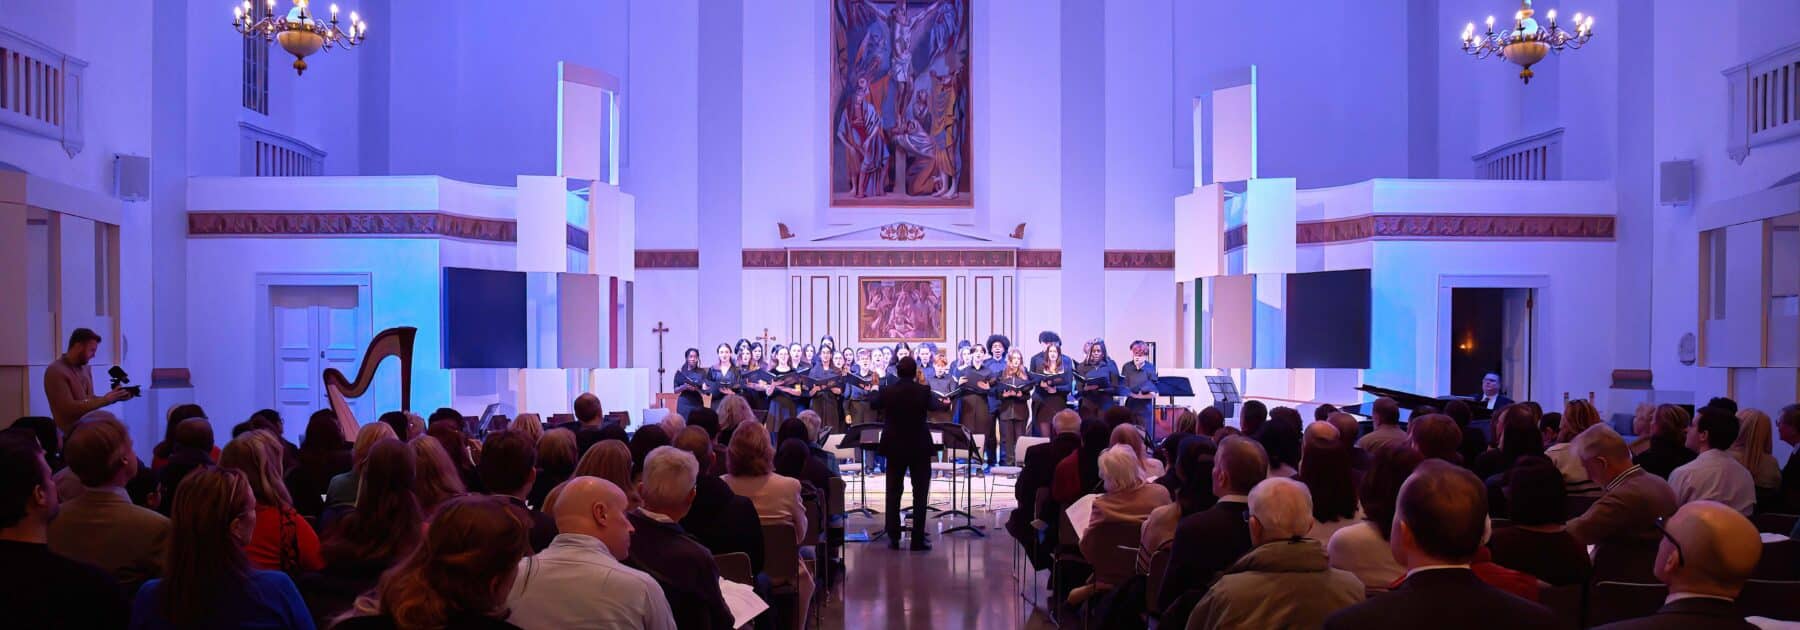 Spectacular Concert at St John’s, Waterloo